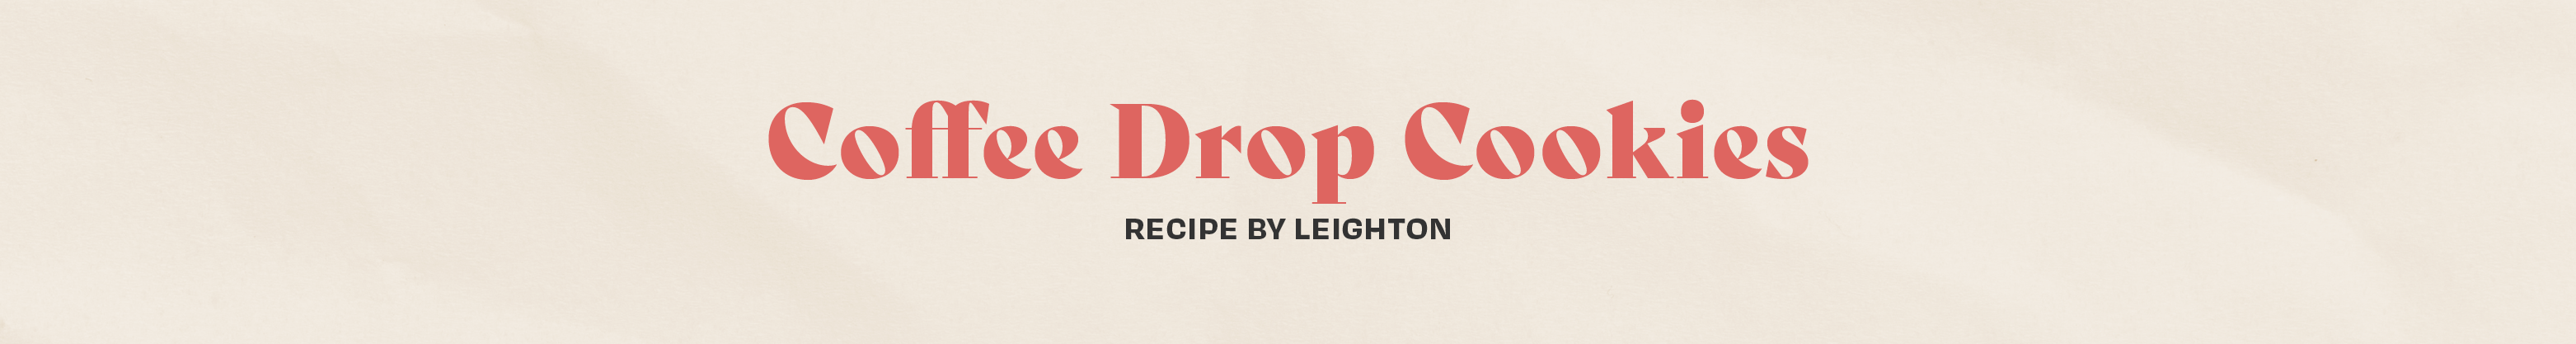 Leighton - Coffee Drop Cookies